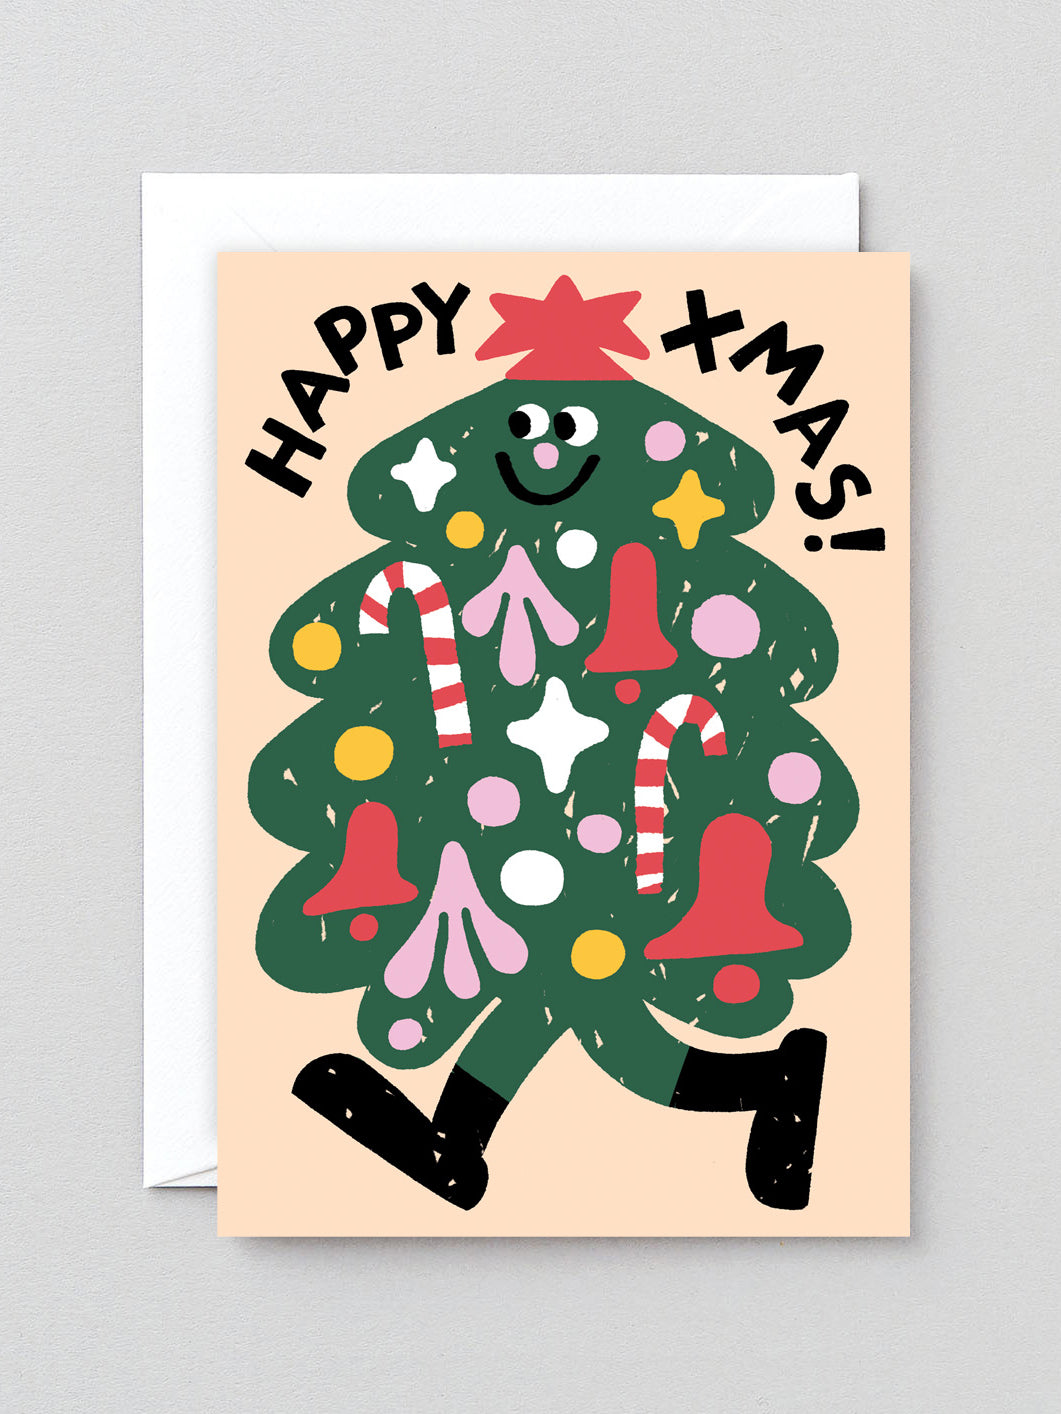 Load image into Gallery viewer, Happy Xmas Tree Card
